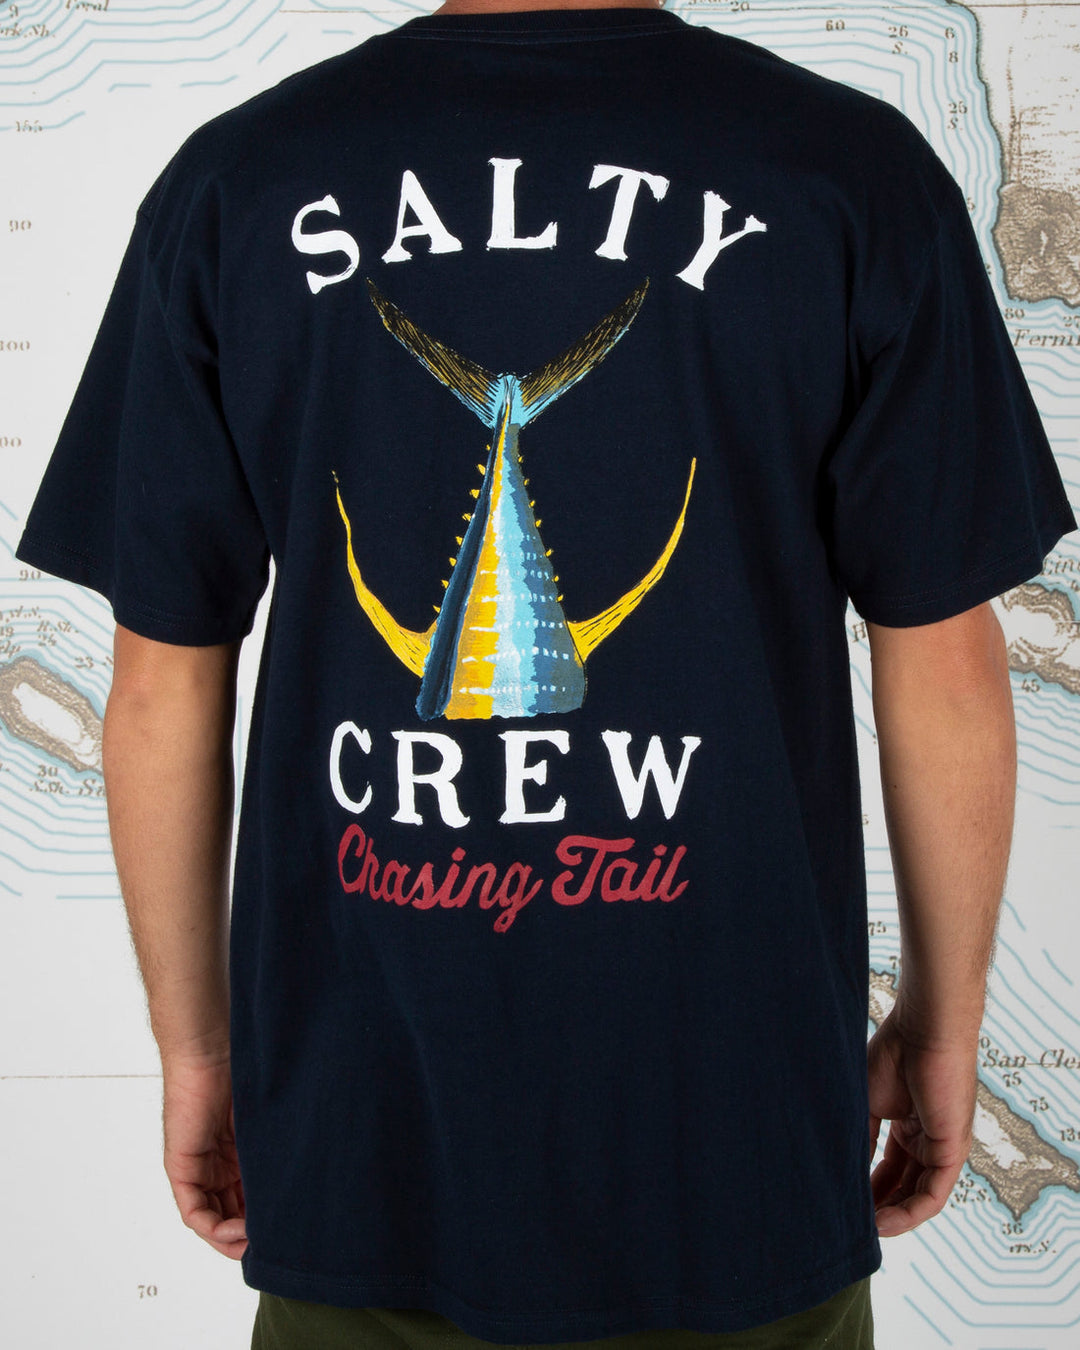 Salty Crew Tailed S/S Standard Tee - Navy - Sun Diego Boardshop